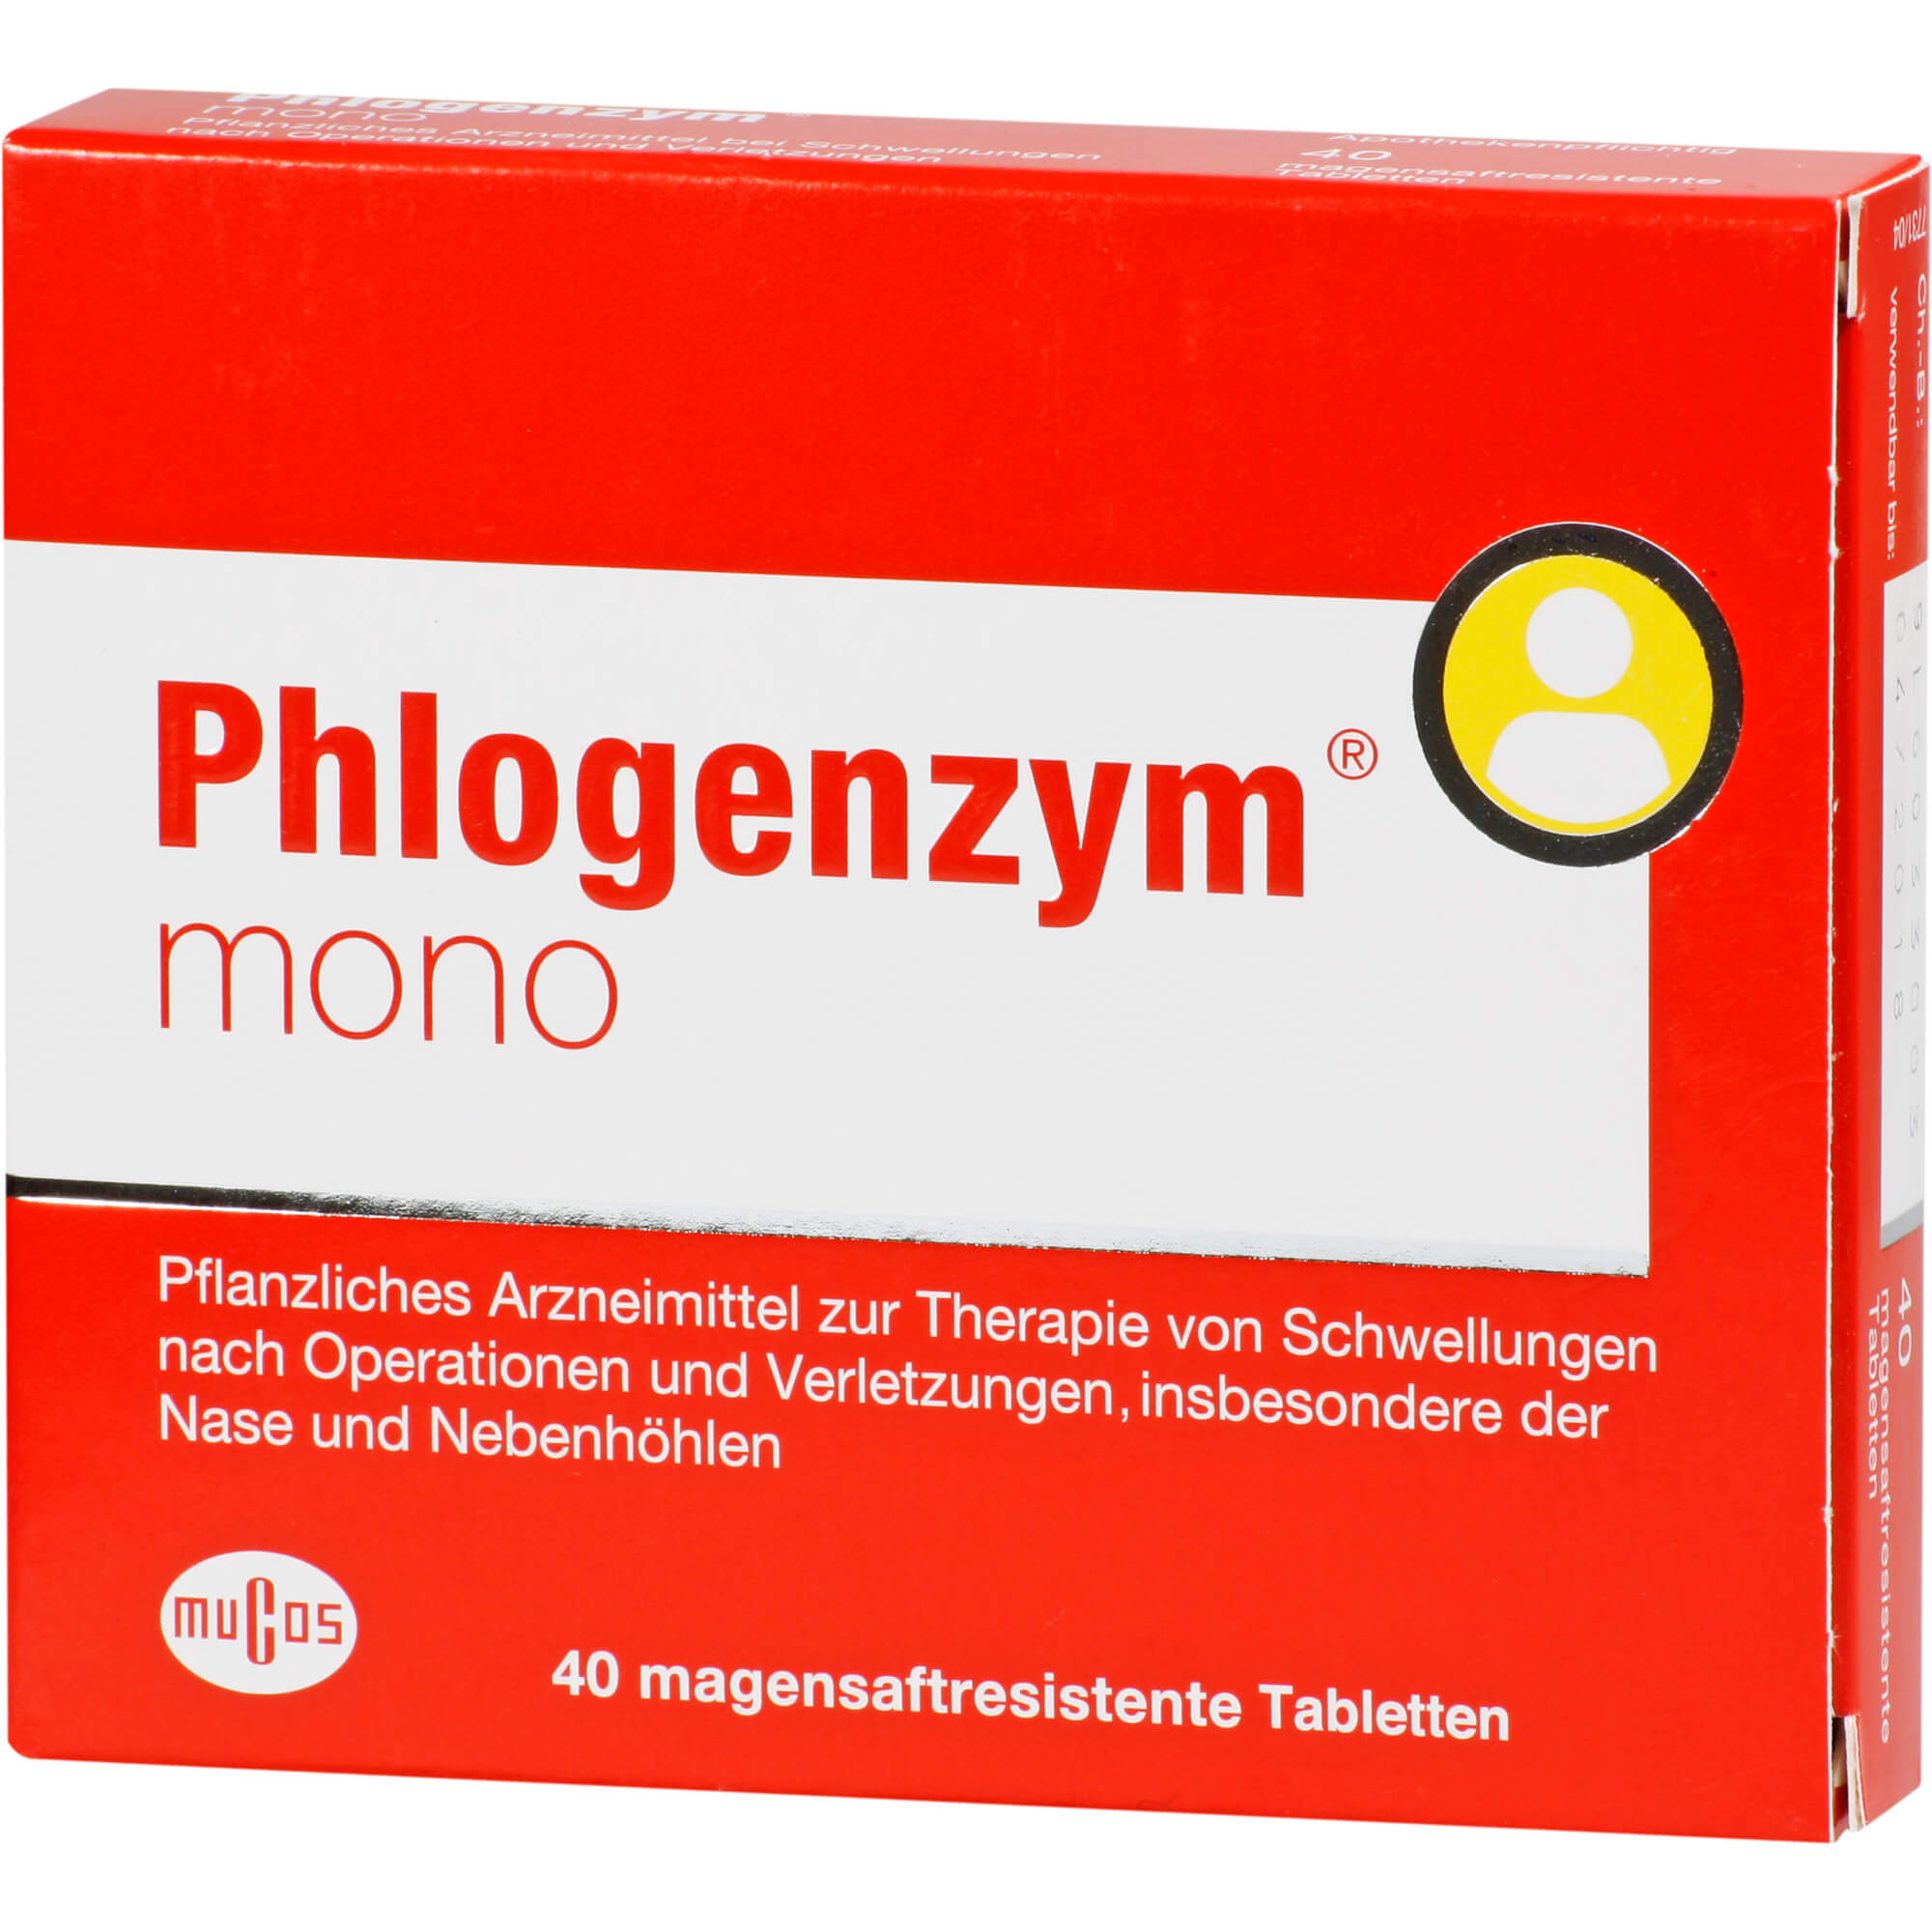 PHLOGENZYM mono magensaftresistente Tabletten